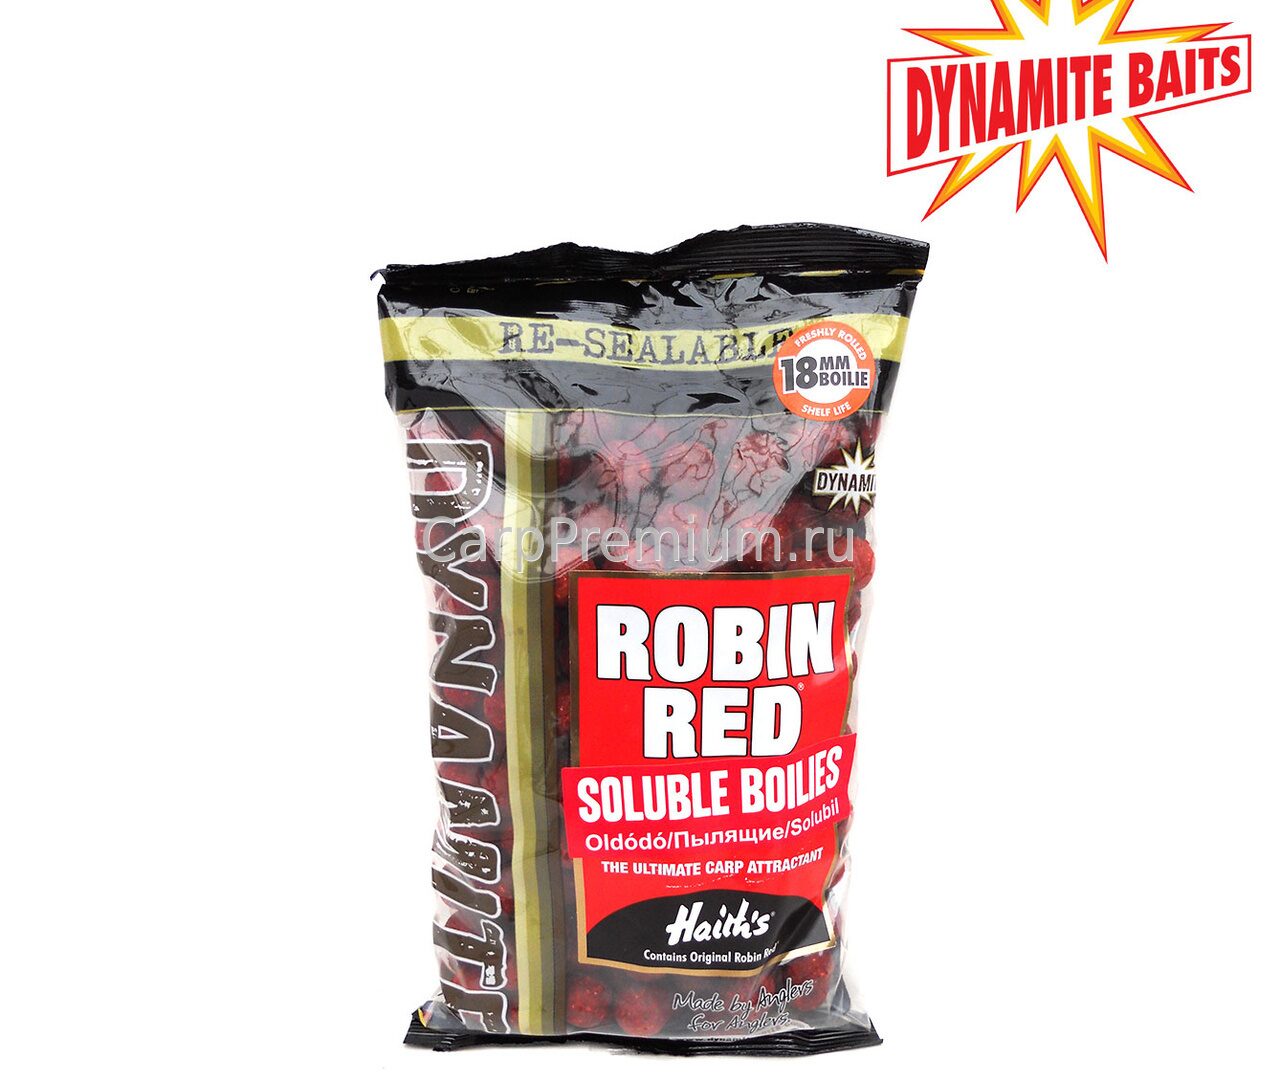 Бойлы пылящие Робин Ред 18 мм Dynamite Baits (Динамит бейтс) - Robin Red Soluble, 1 кг